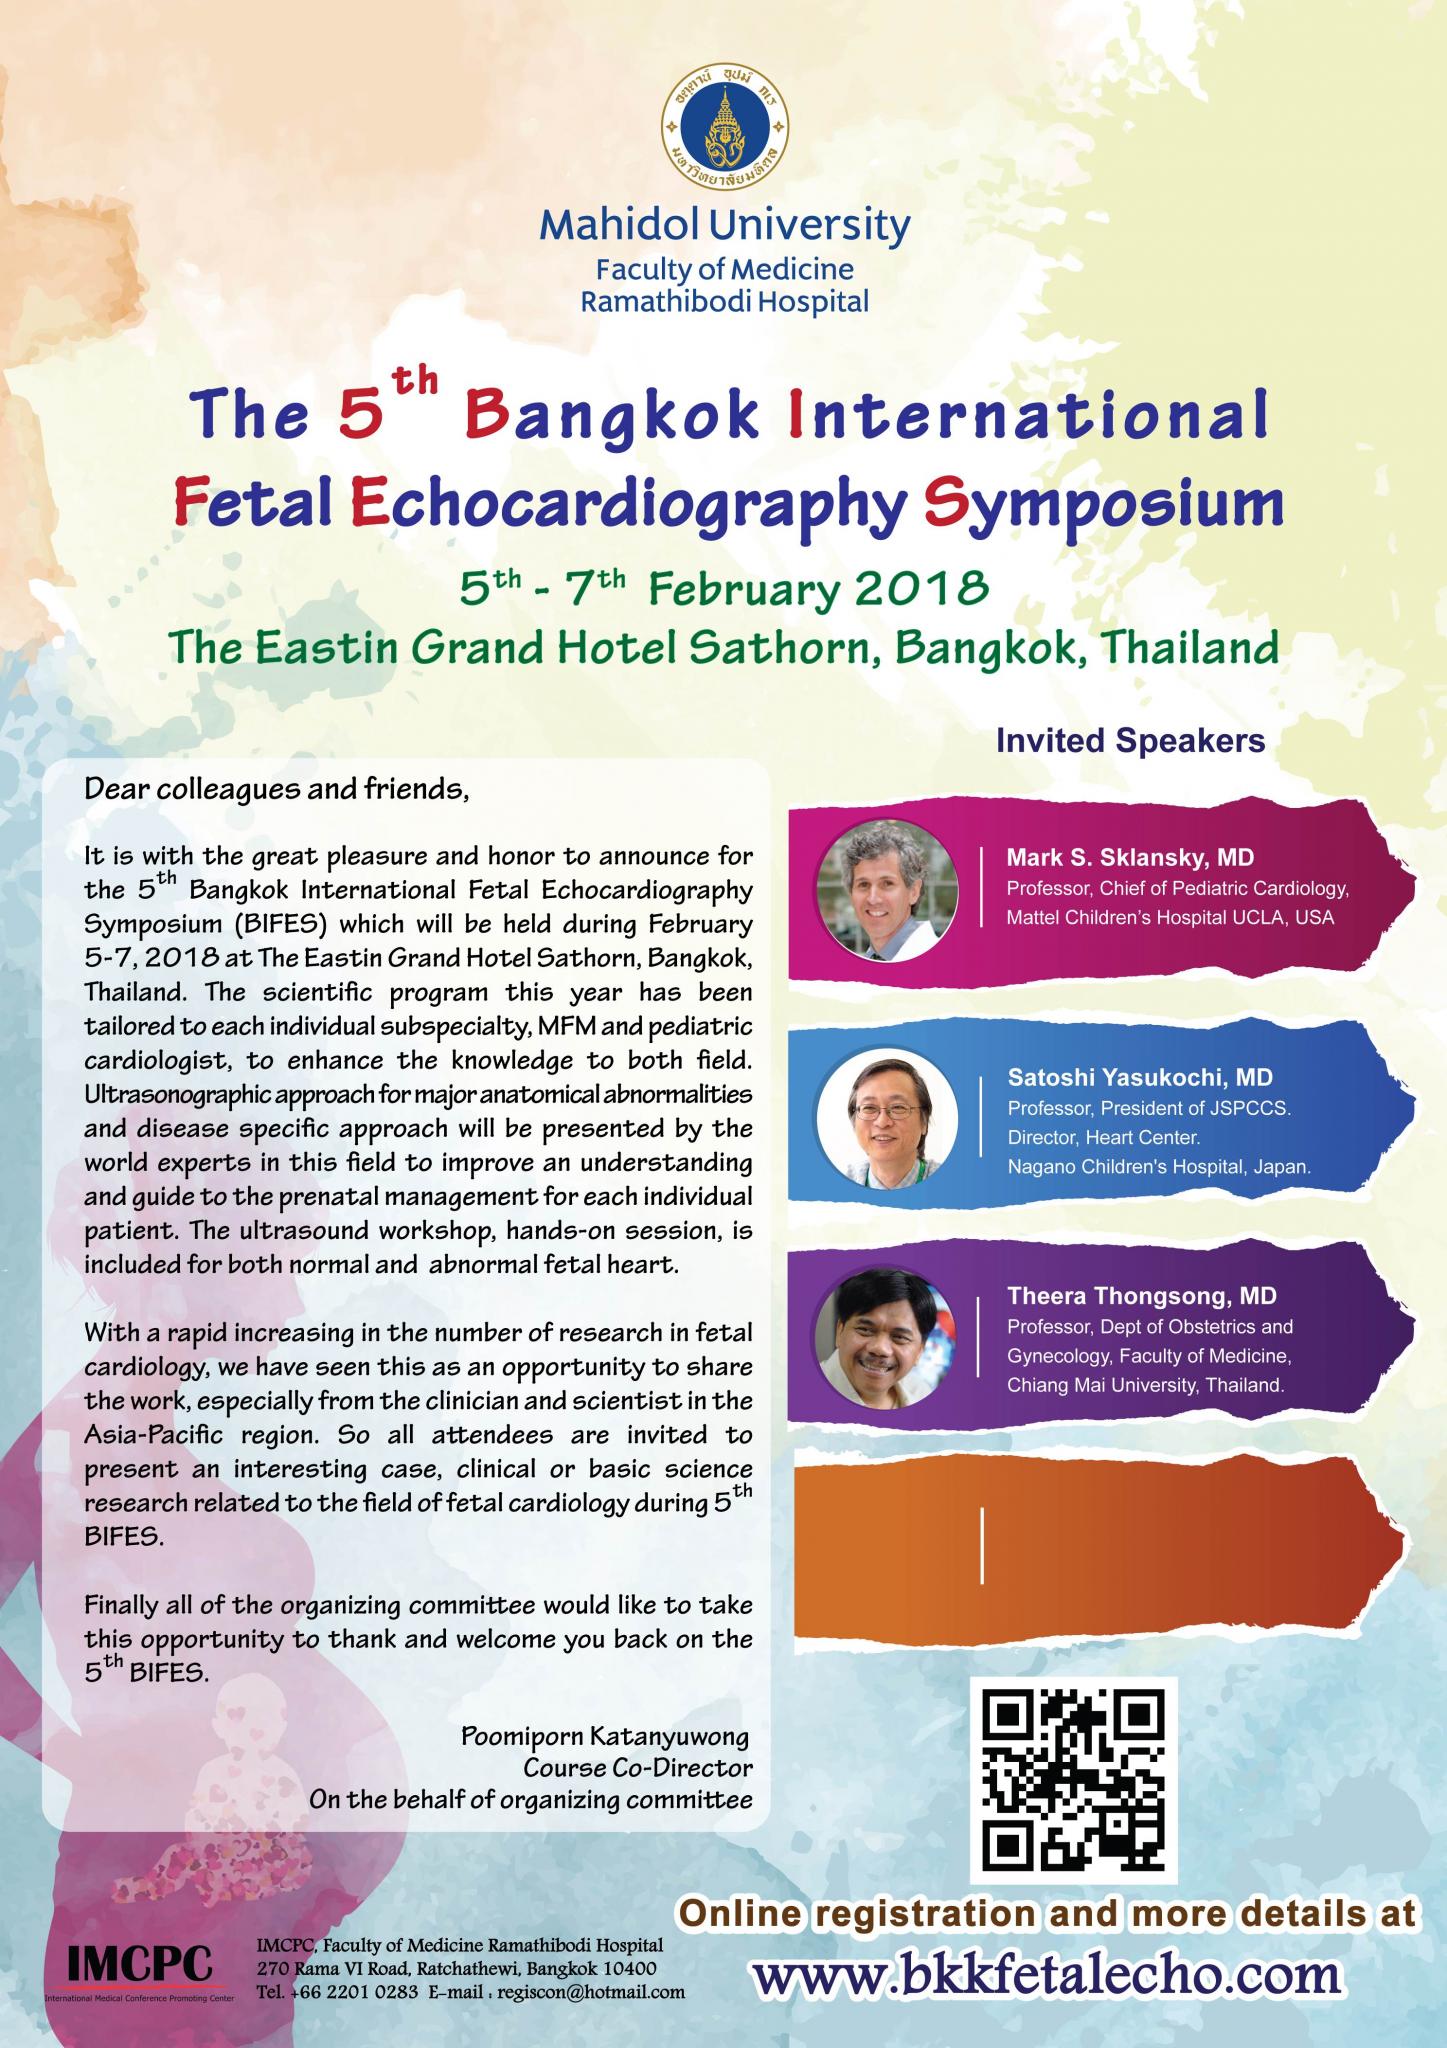 The 5th Bangkok International Fetal Echocardiography Symposium